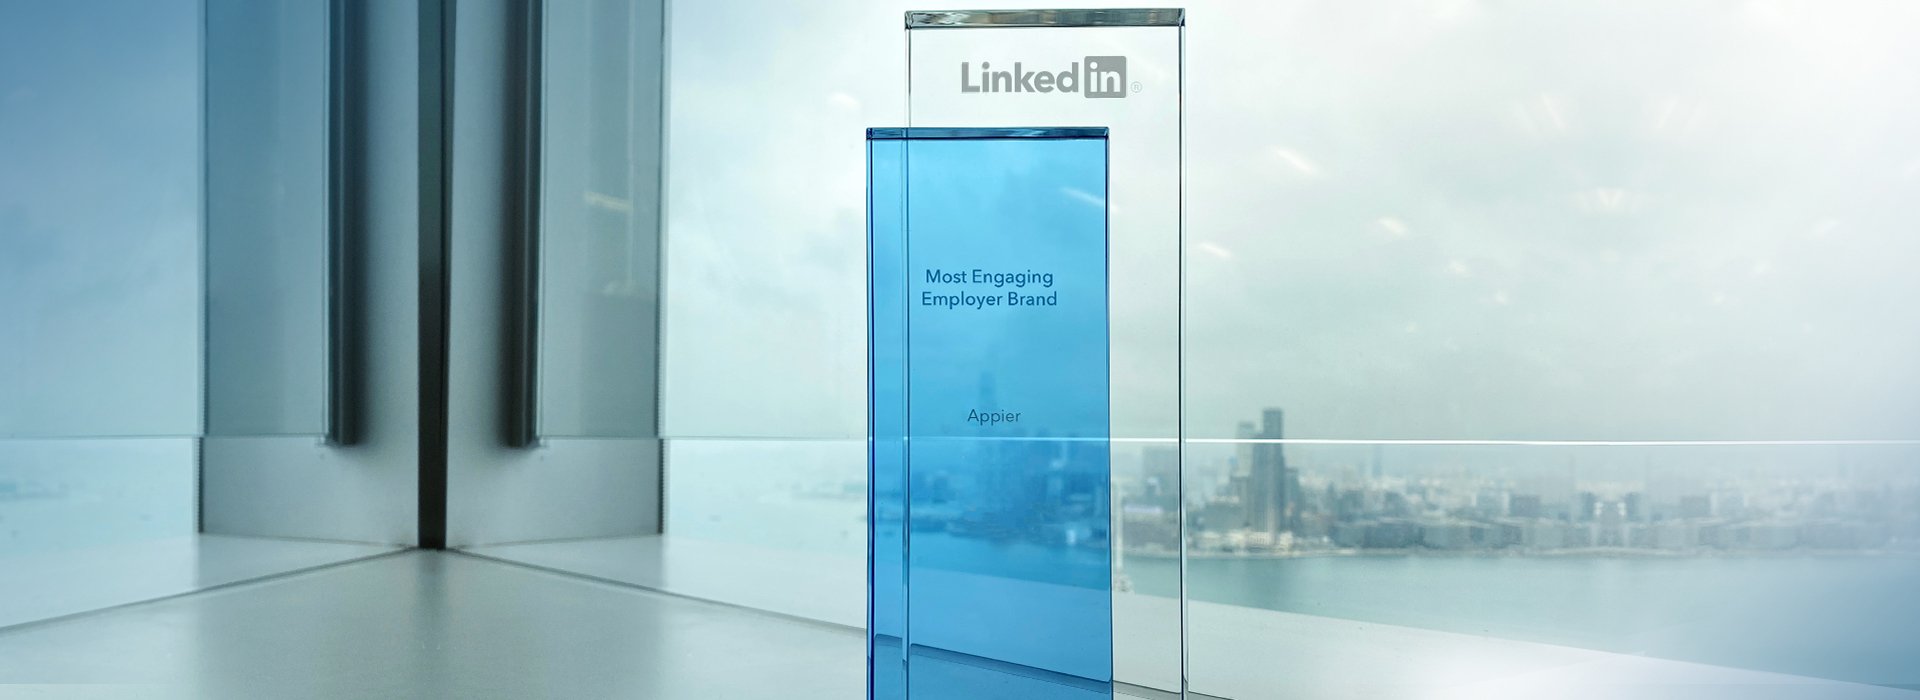 PR_LinkedIn-Award-News-Banner-1